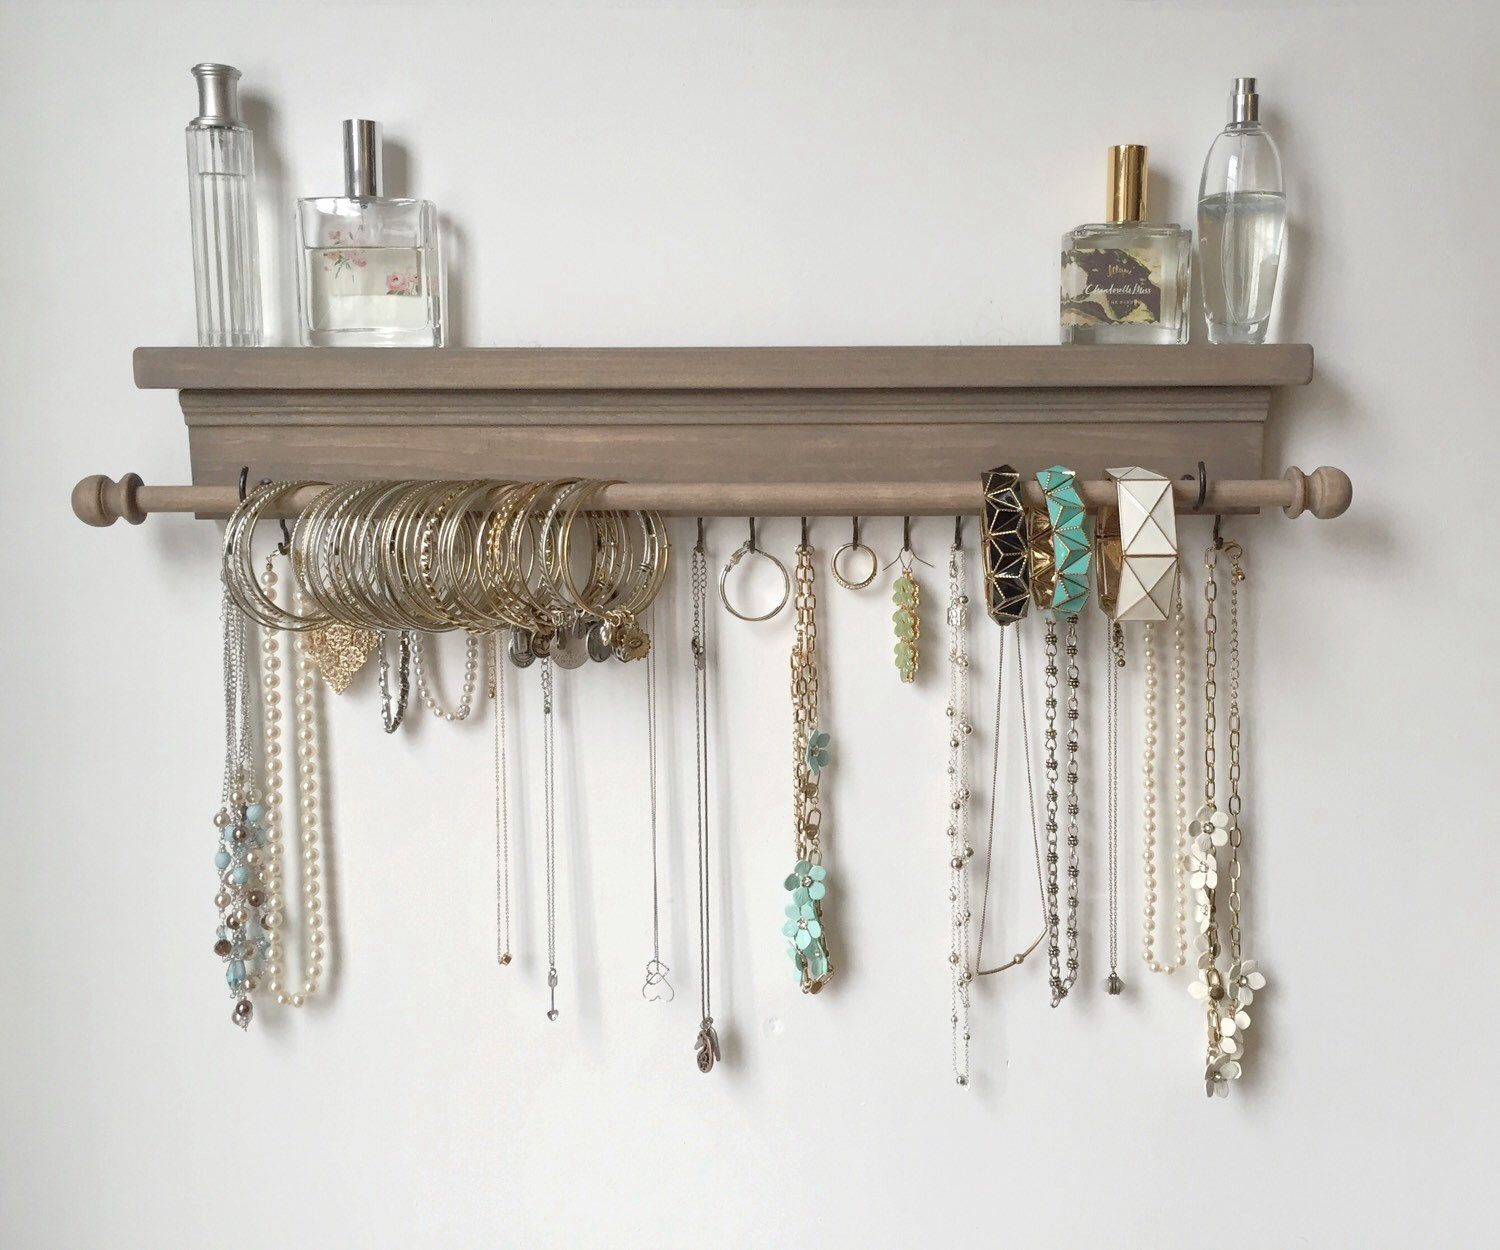 Jewelry storage hanging organizer